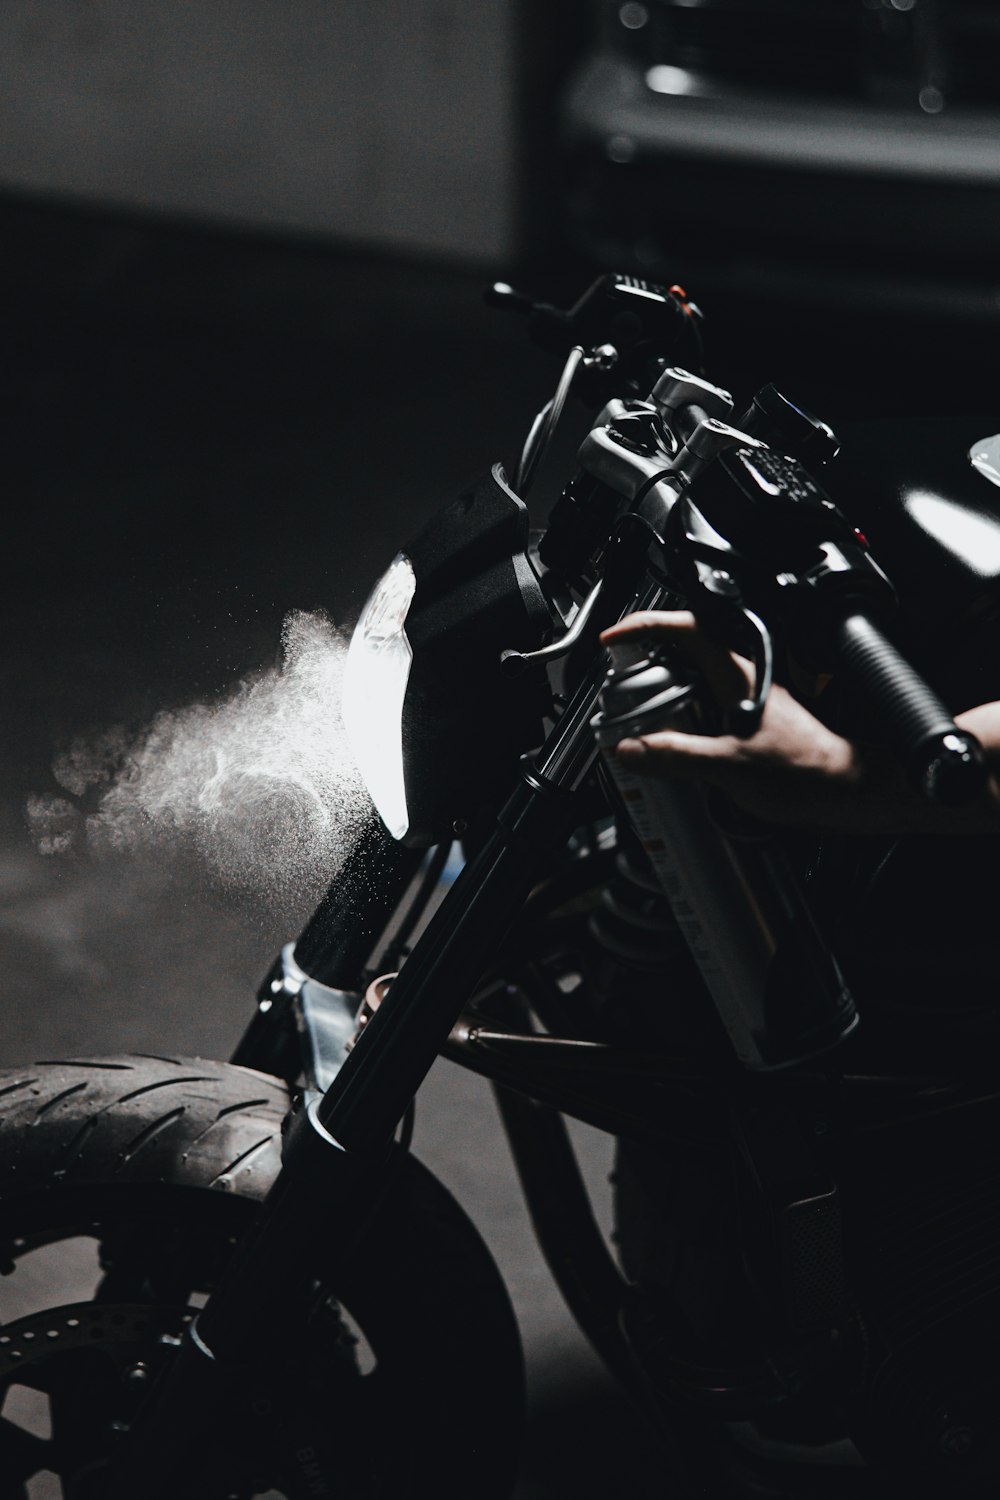 black motorcycle with white smoke